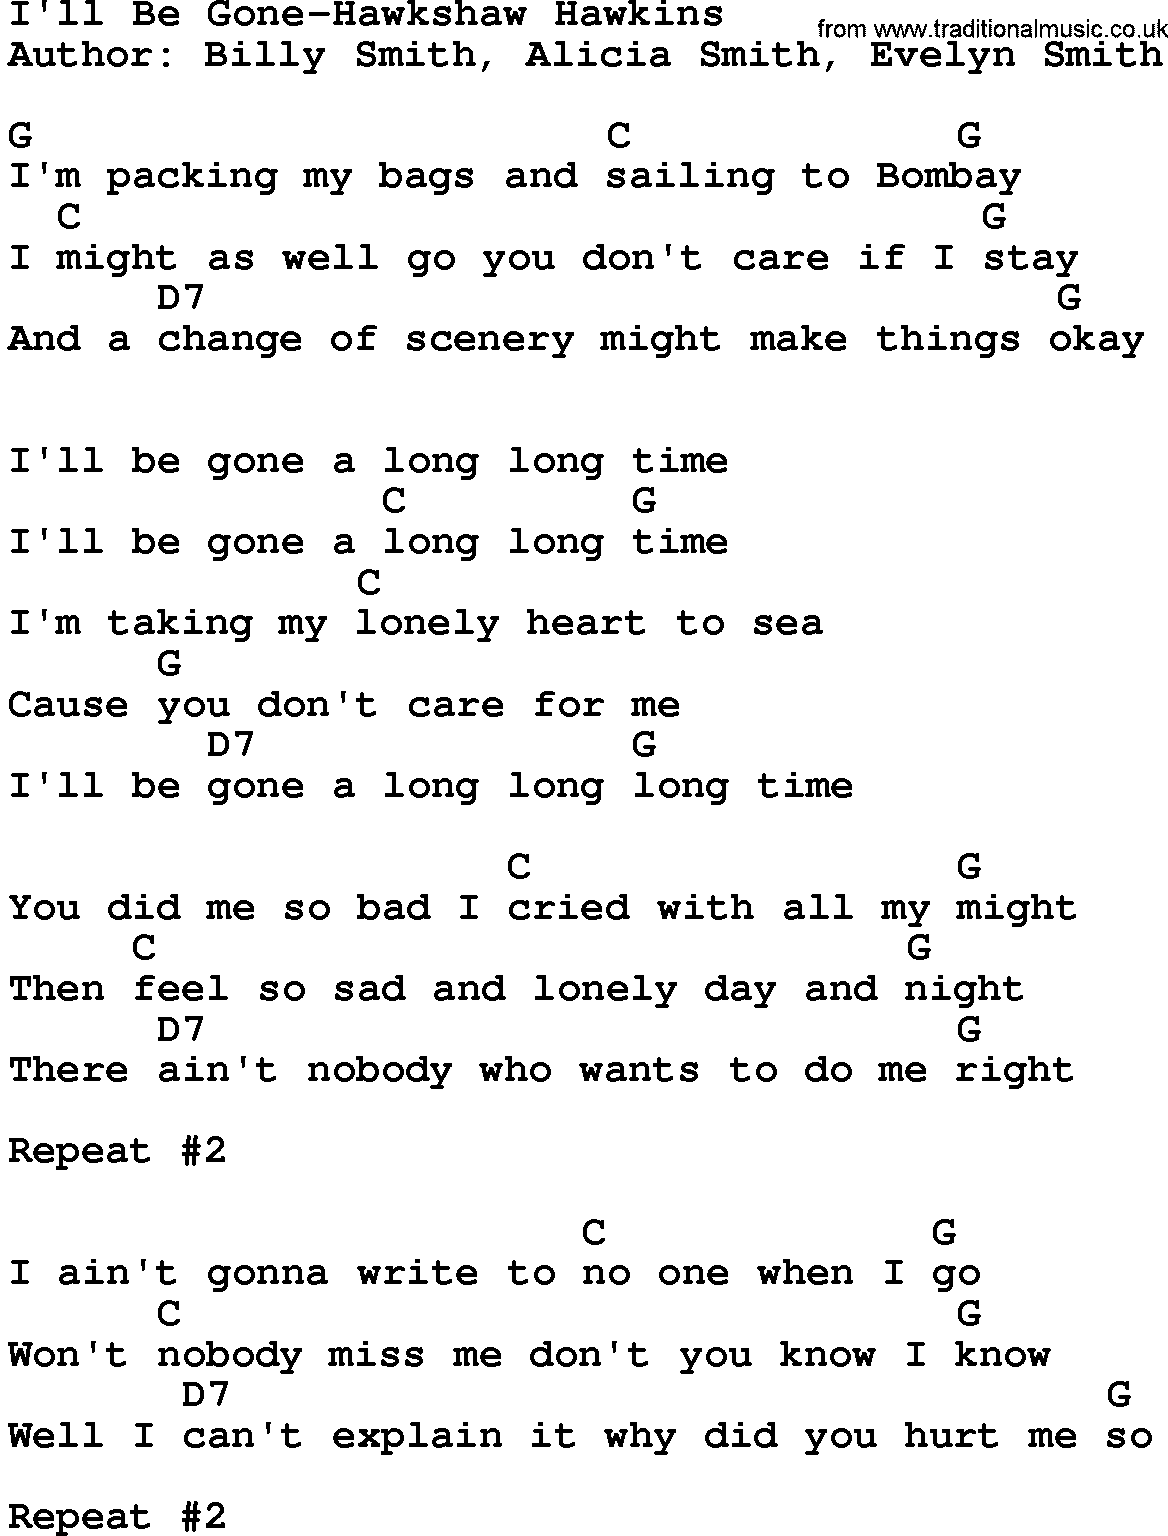 Country music song: I'll Be Gone-Hawkshaw Hawkins lyrics and chords